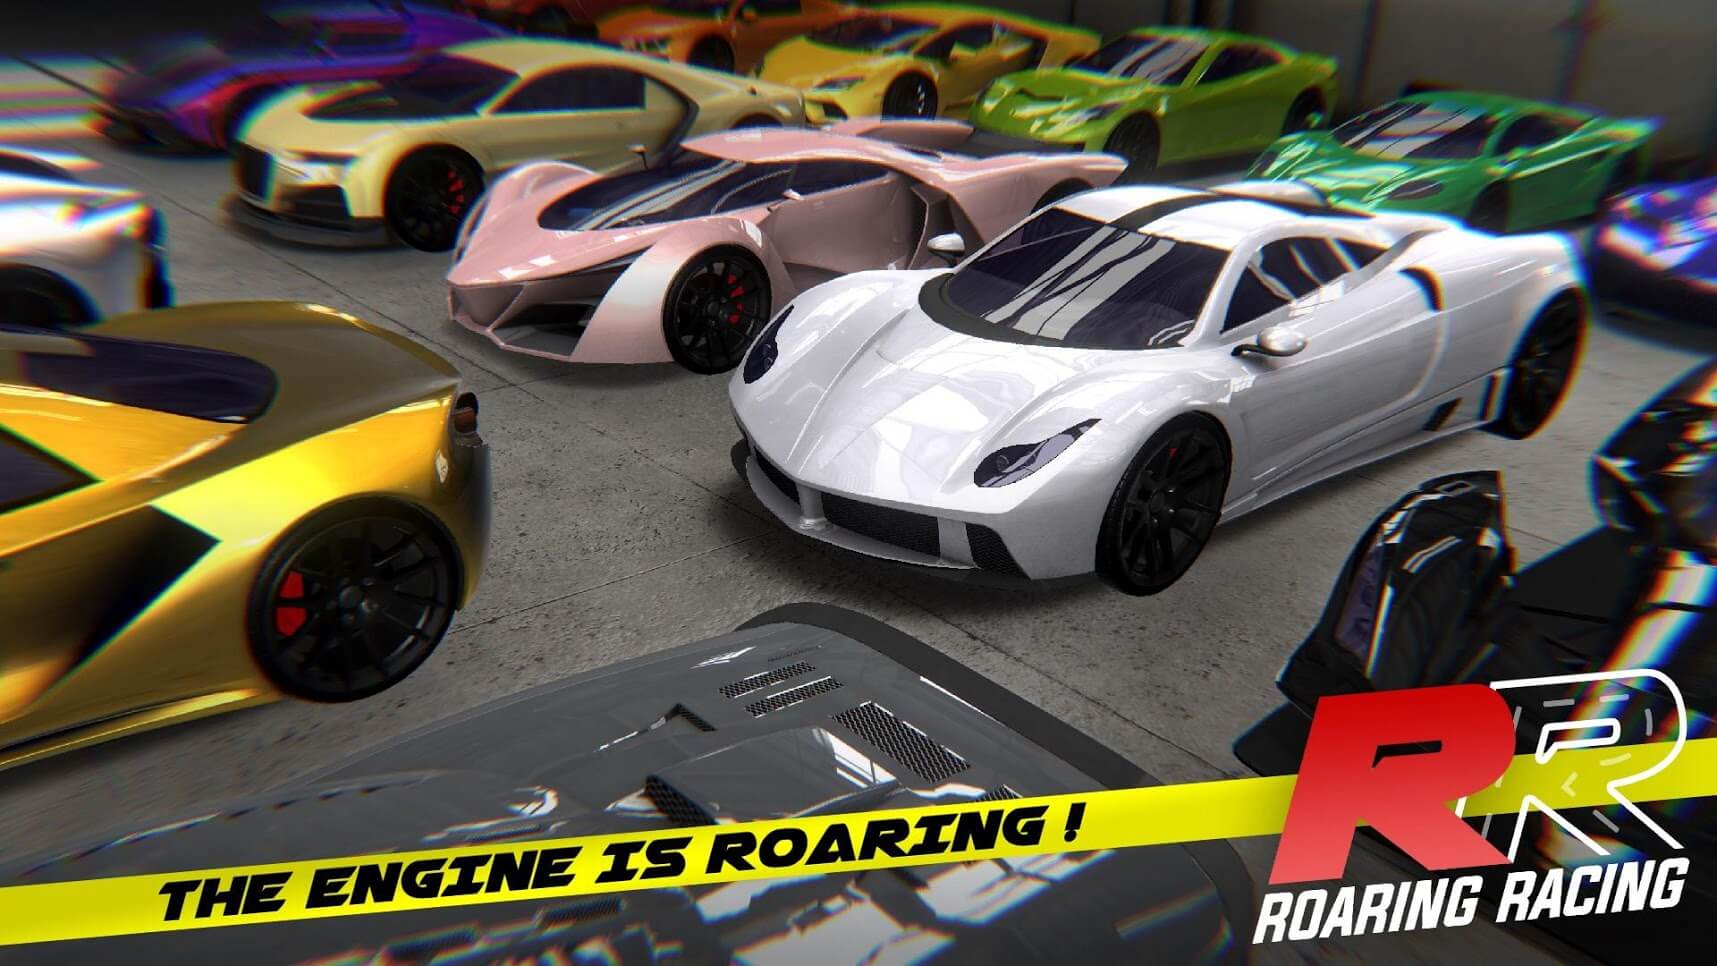 Roaring-Racing-6.jpg